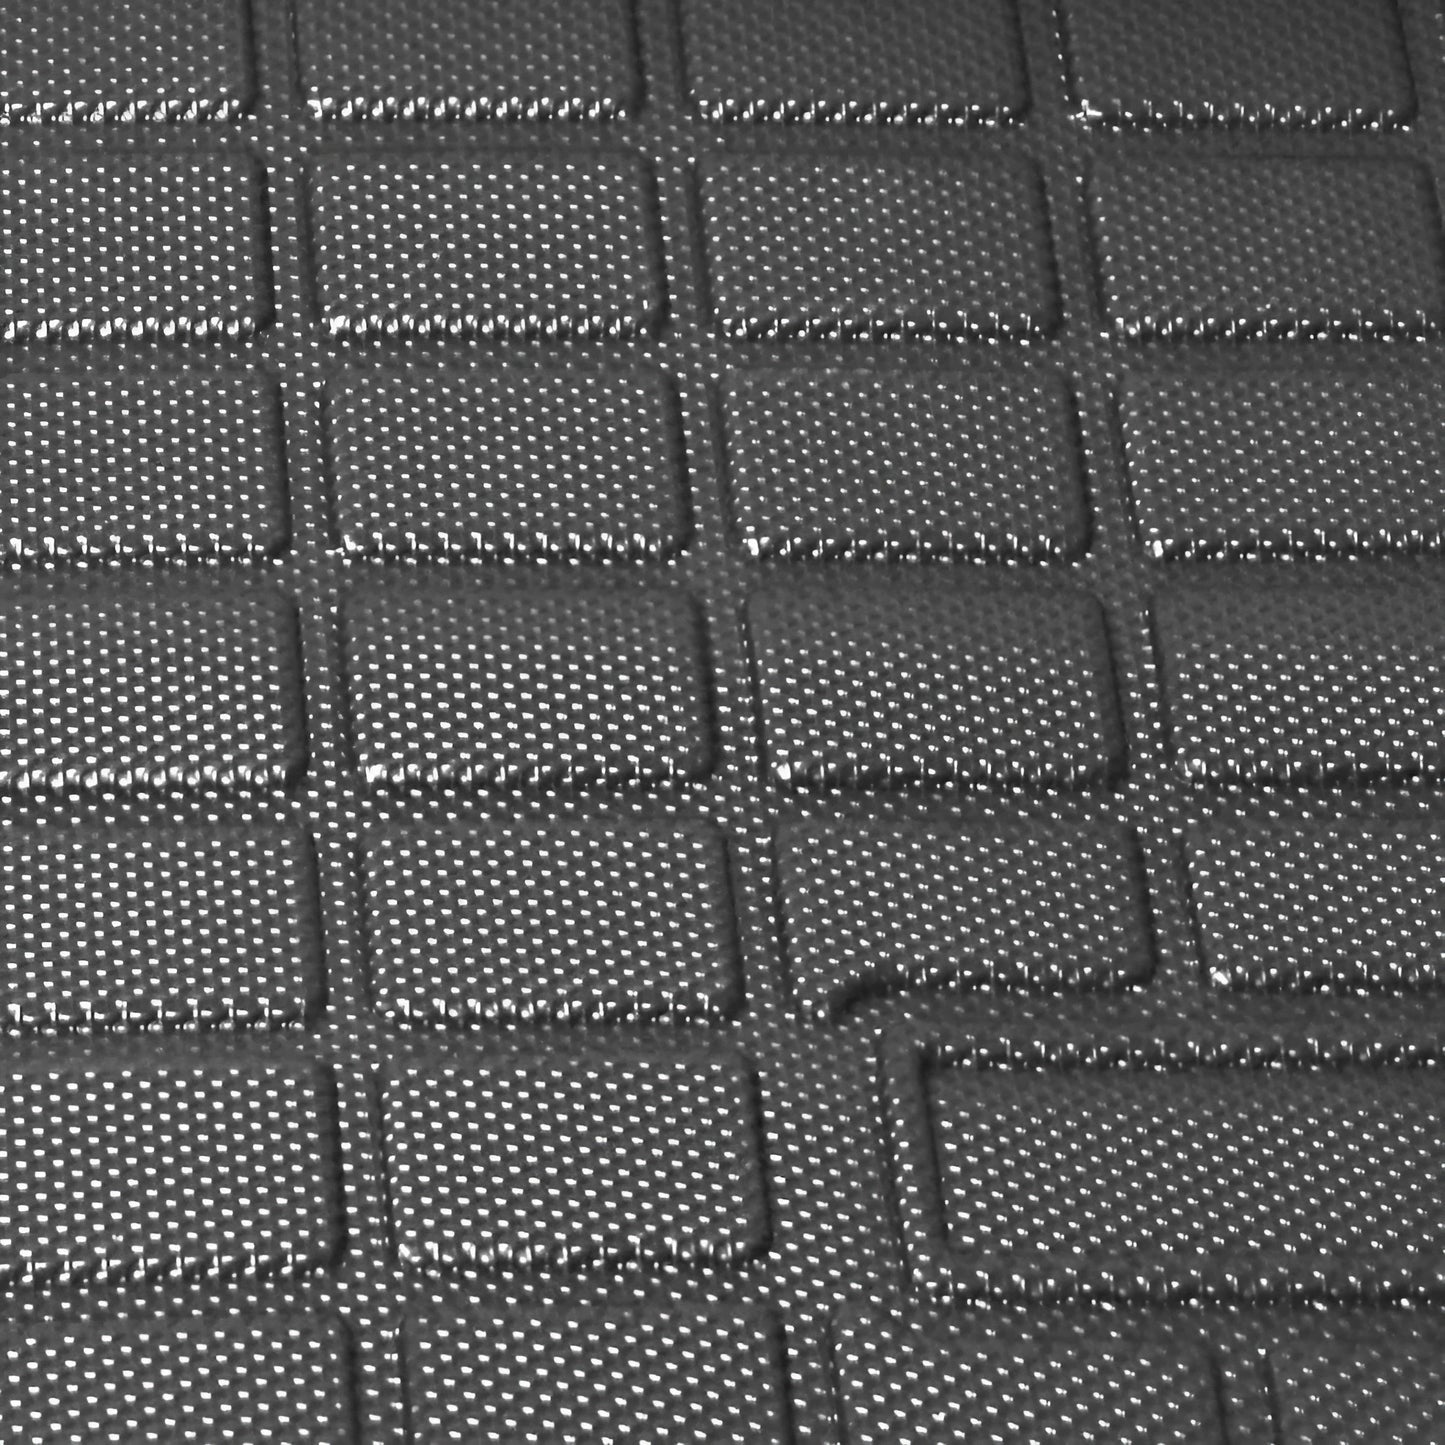 Tesla Model Y floor mat close up